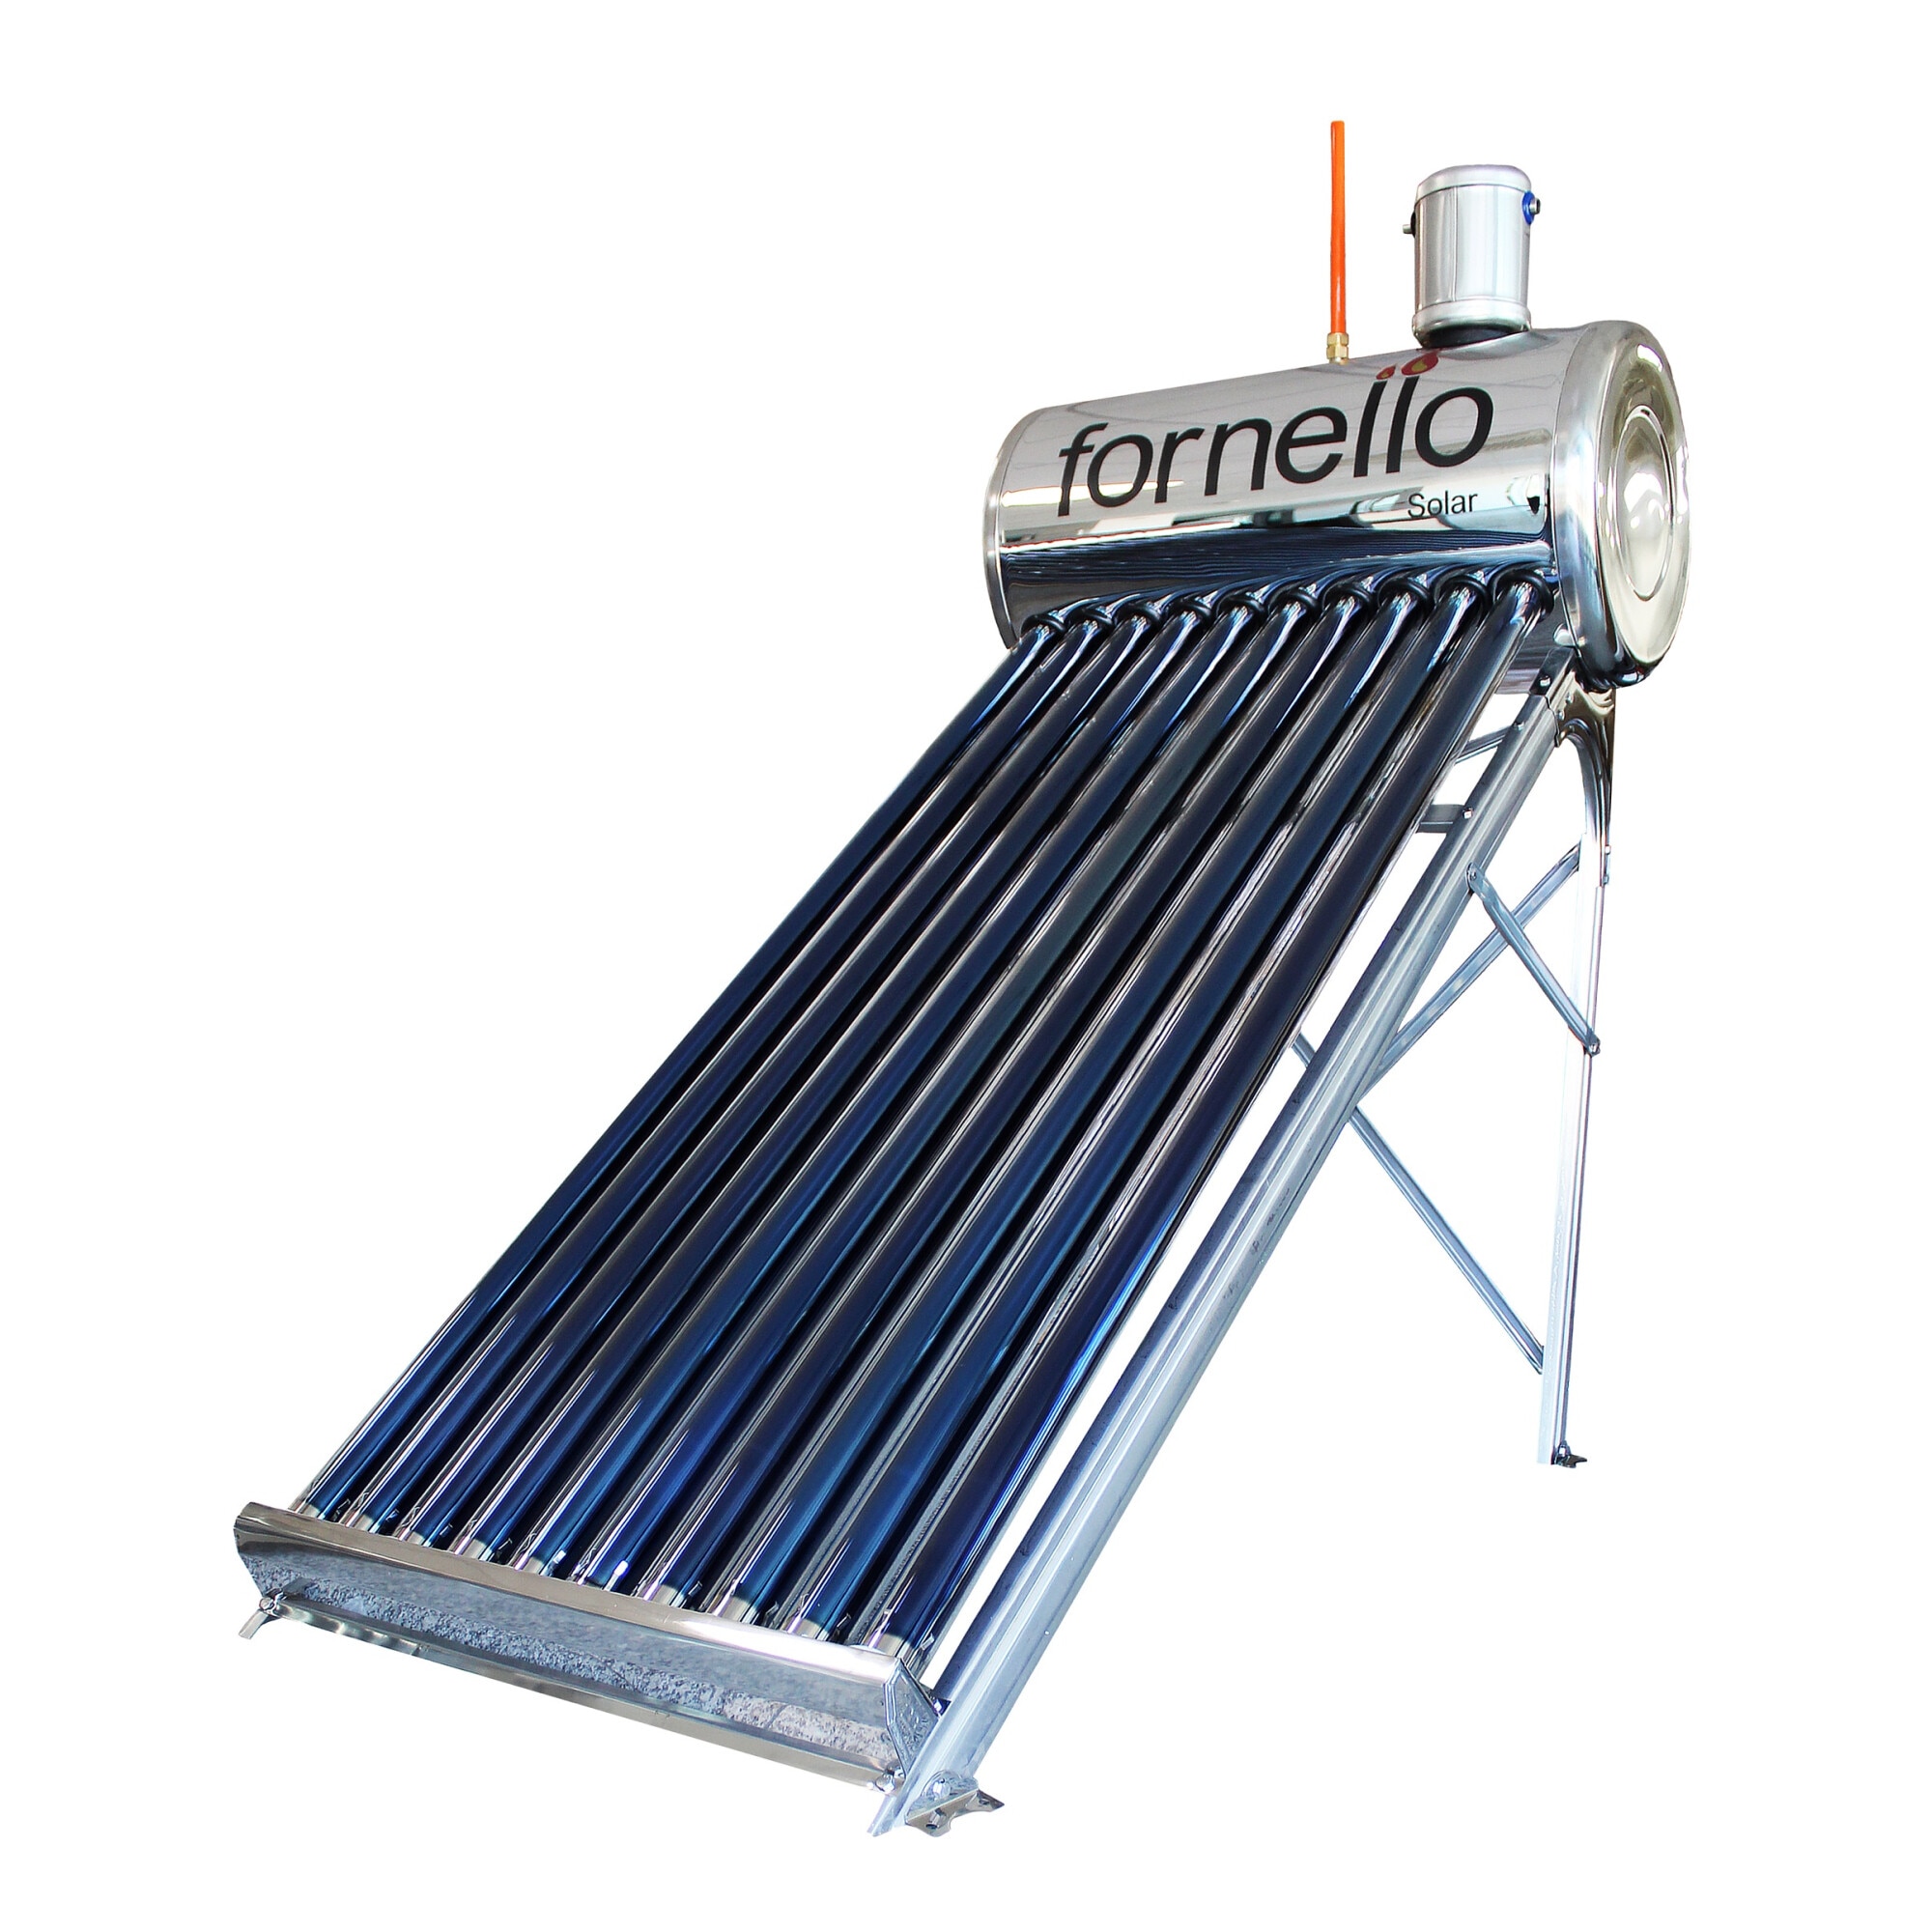 Dismiss expand Dissipate Panou solar nepresurizat Fornello pentru producere apa calda, cu rezervor  inox 82 litri si 10 tuburi vidate - eMAG.ro